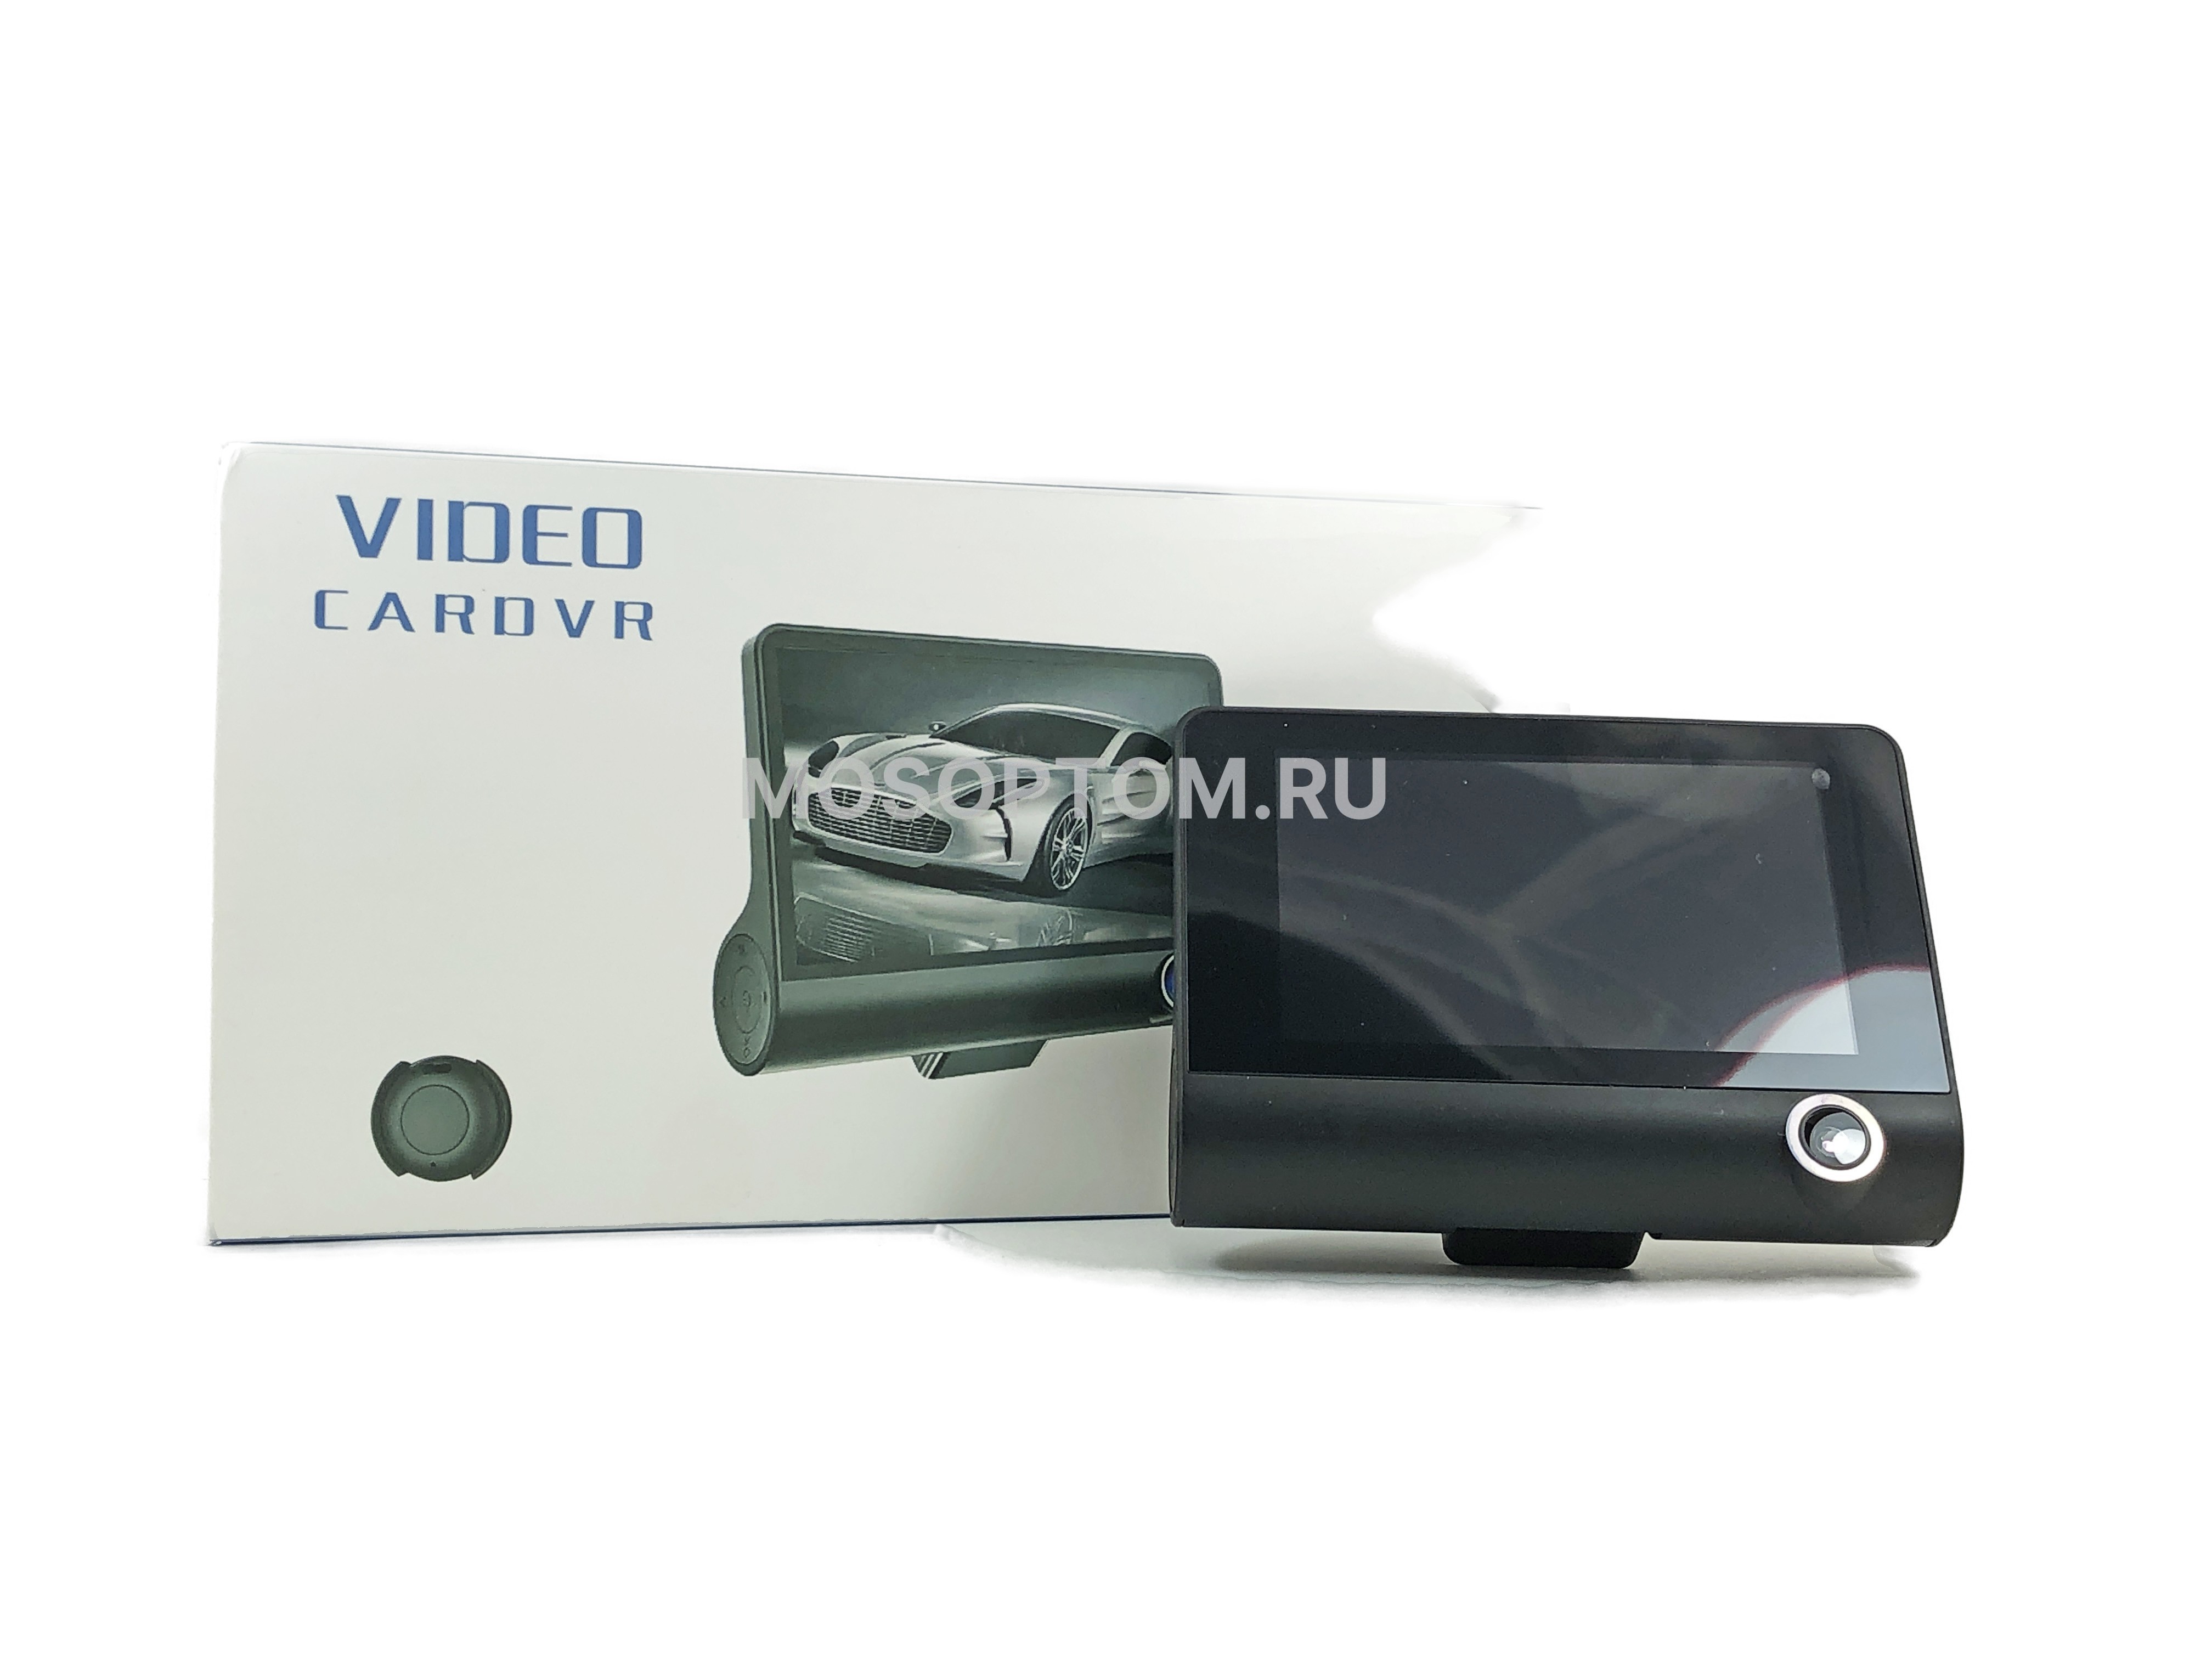 Видеорегистратор Video Cardvr Z33D оптом